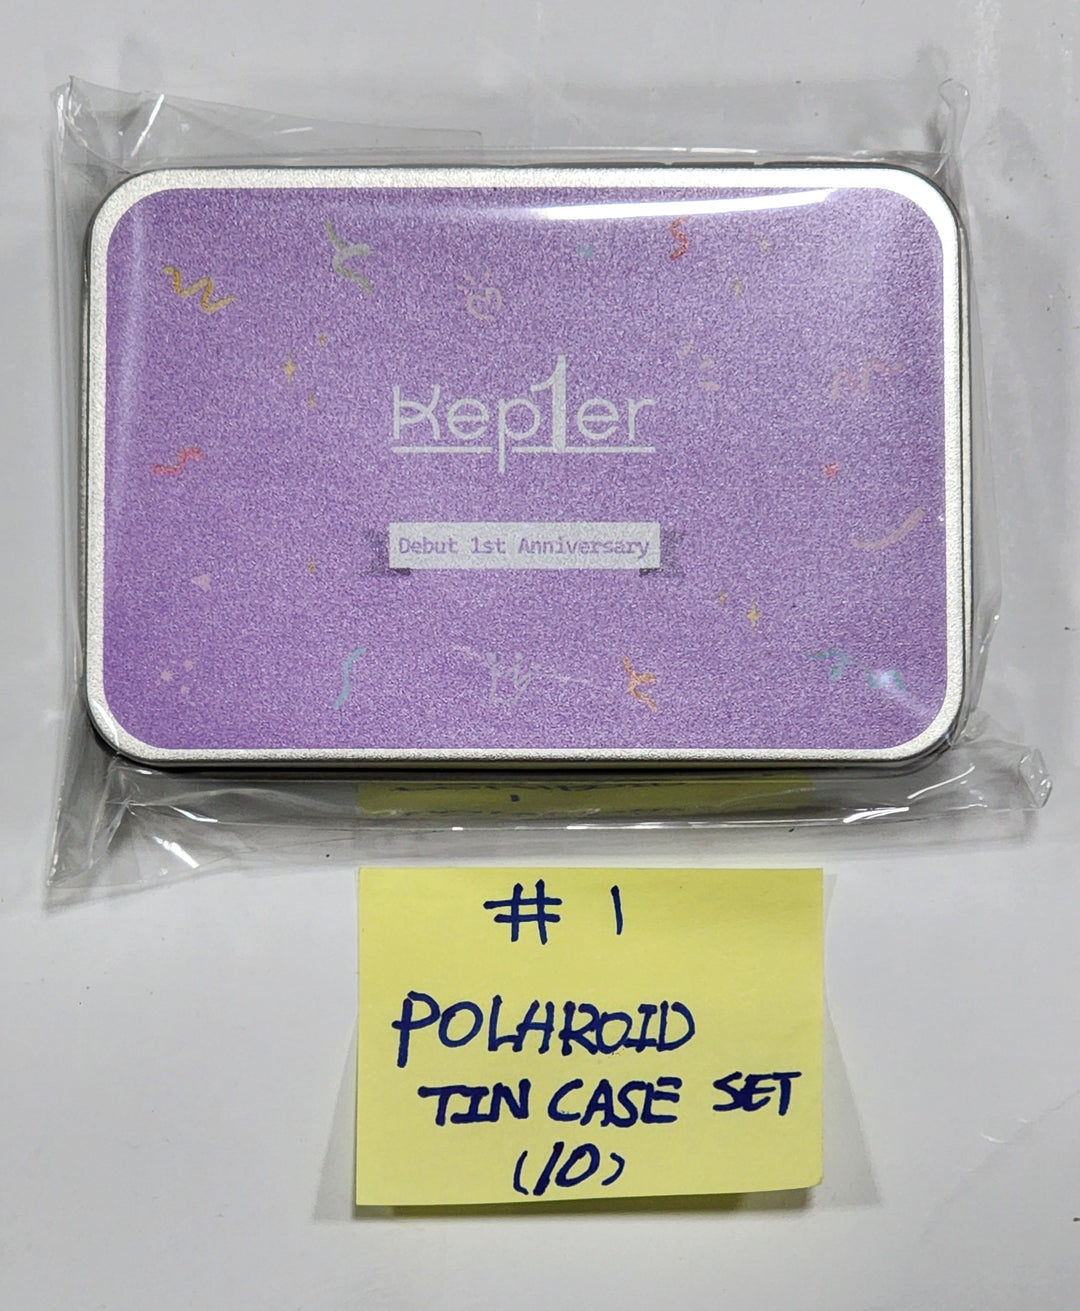 Kep1er "Debut 1st Anniversary" - Official MD [Polaroid Tincase Set, Mini Photo Binder Keyring Set]